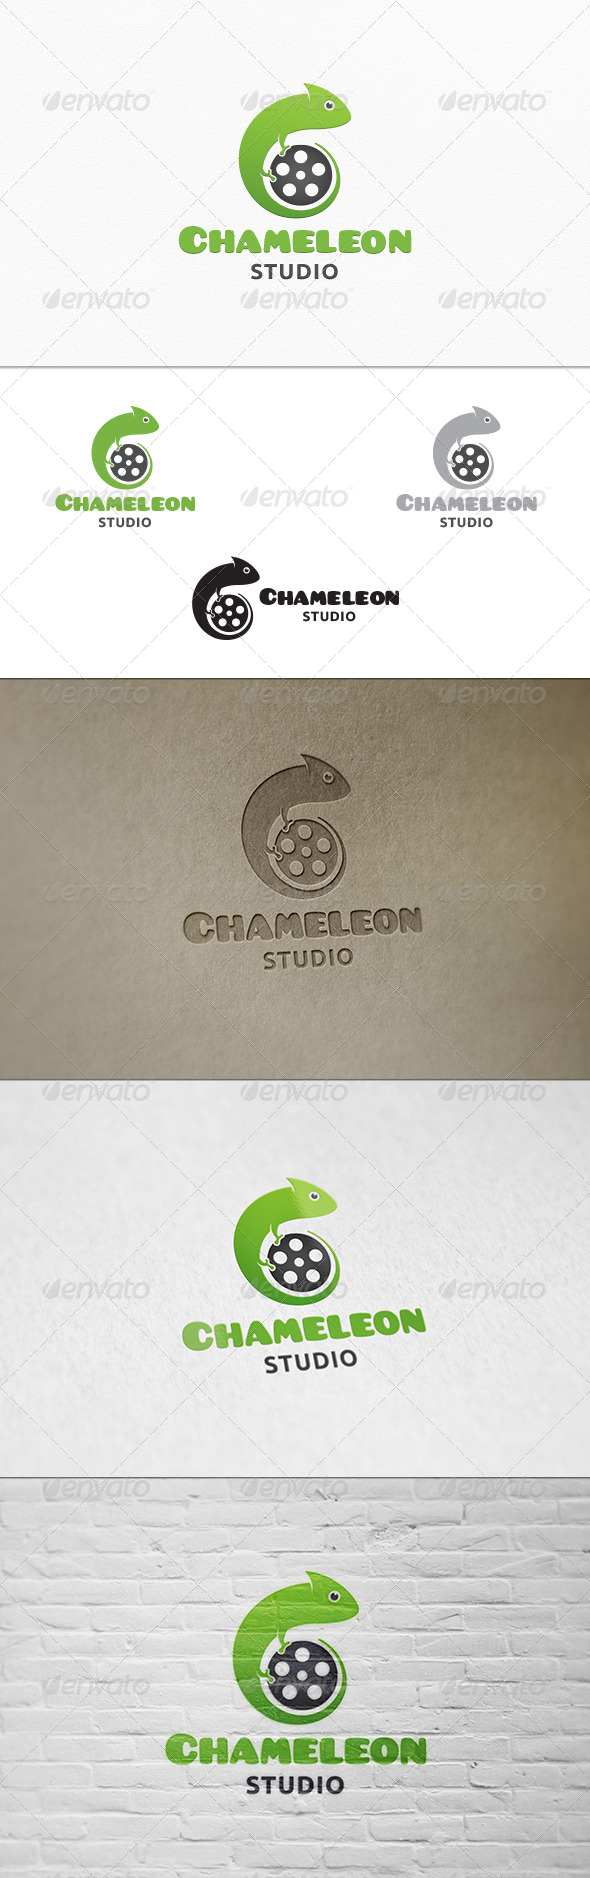 GraphicRiver Chameleon Studio Logo Template 7668408